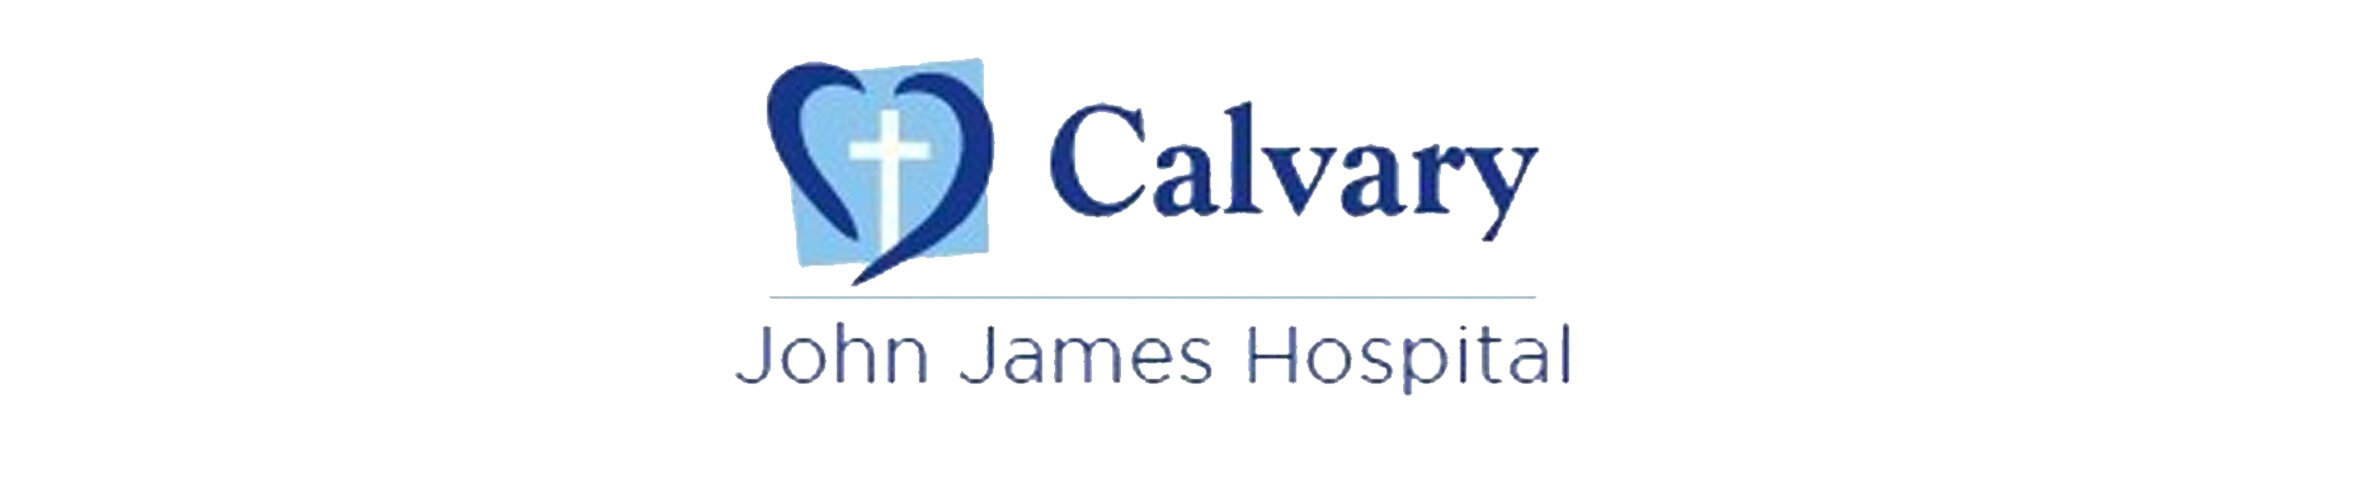 Calvary John James Hospital